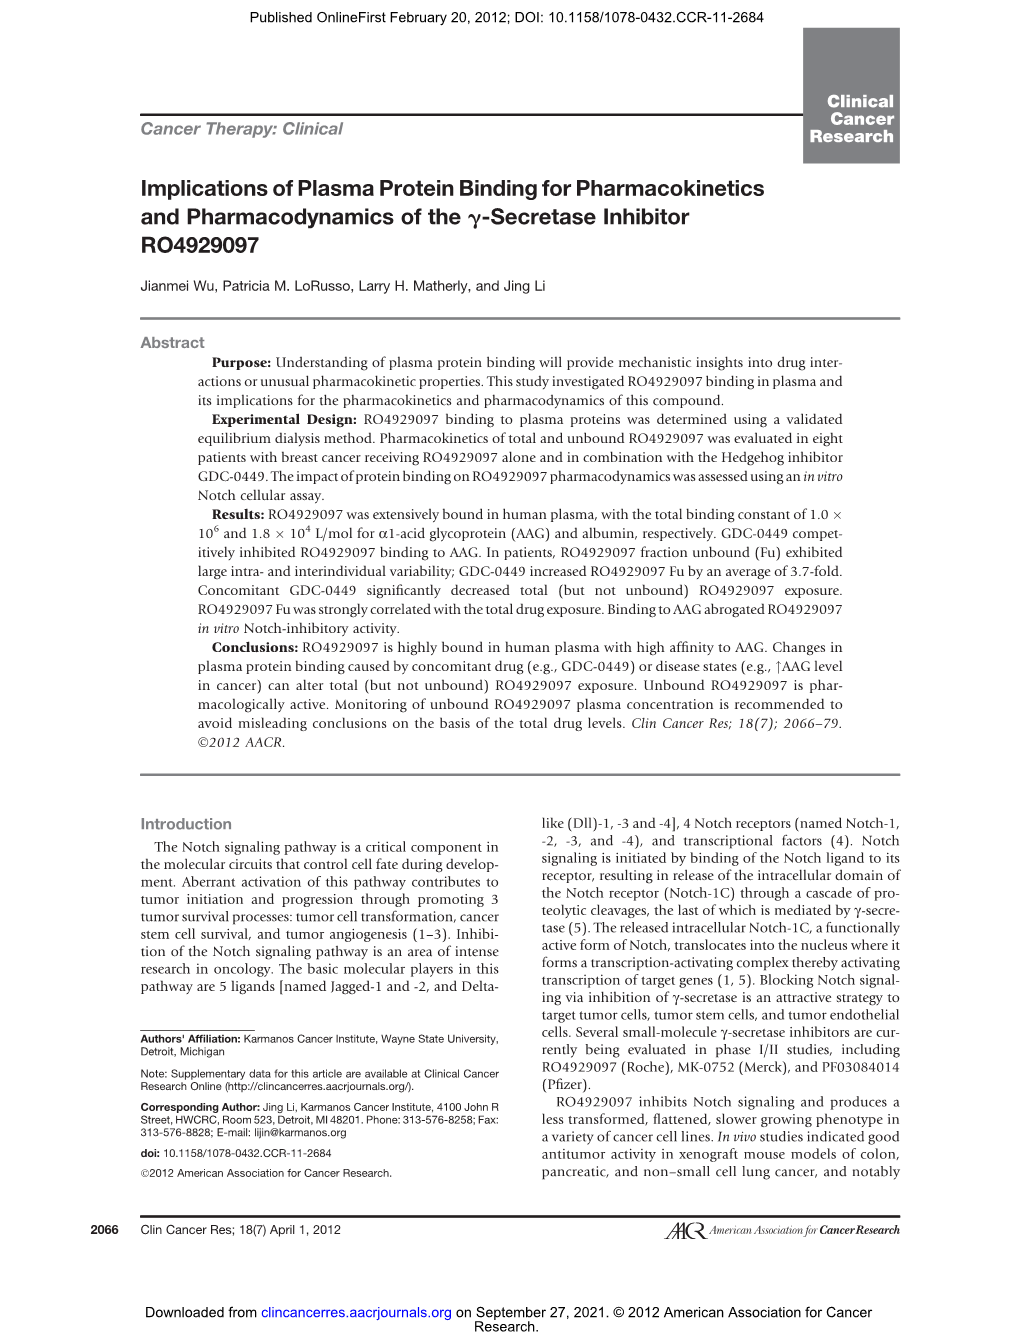 Implications of Plasma Protein Binding for Pharmacokinetics and Pharmacodynamics of the G-Secretase Inhibitor RO4929097